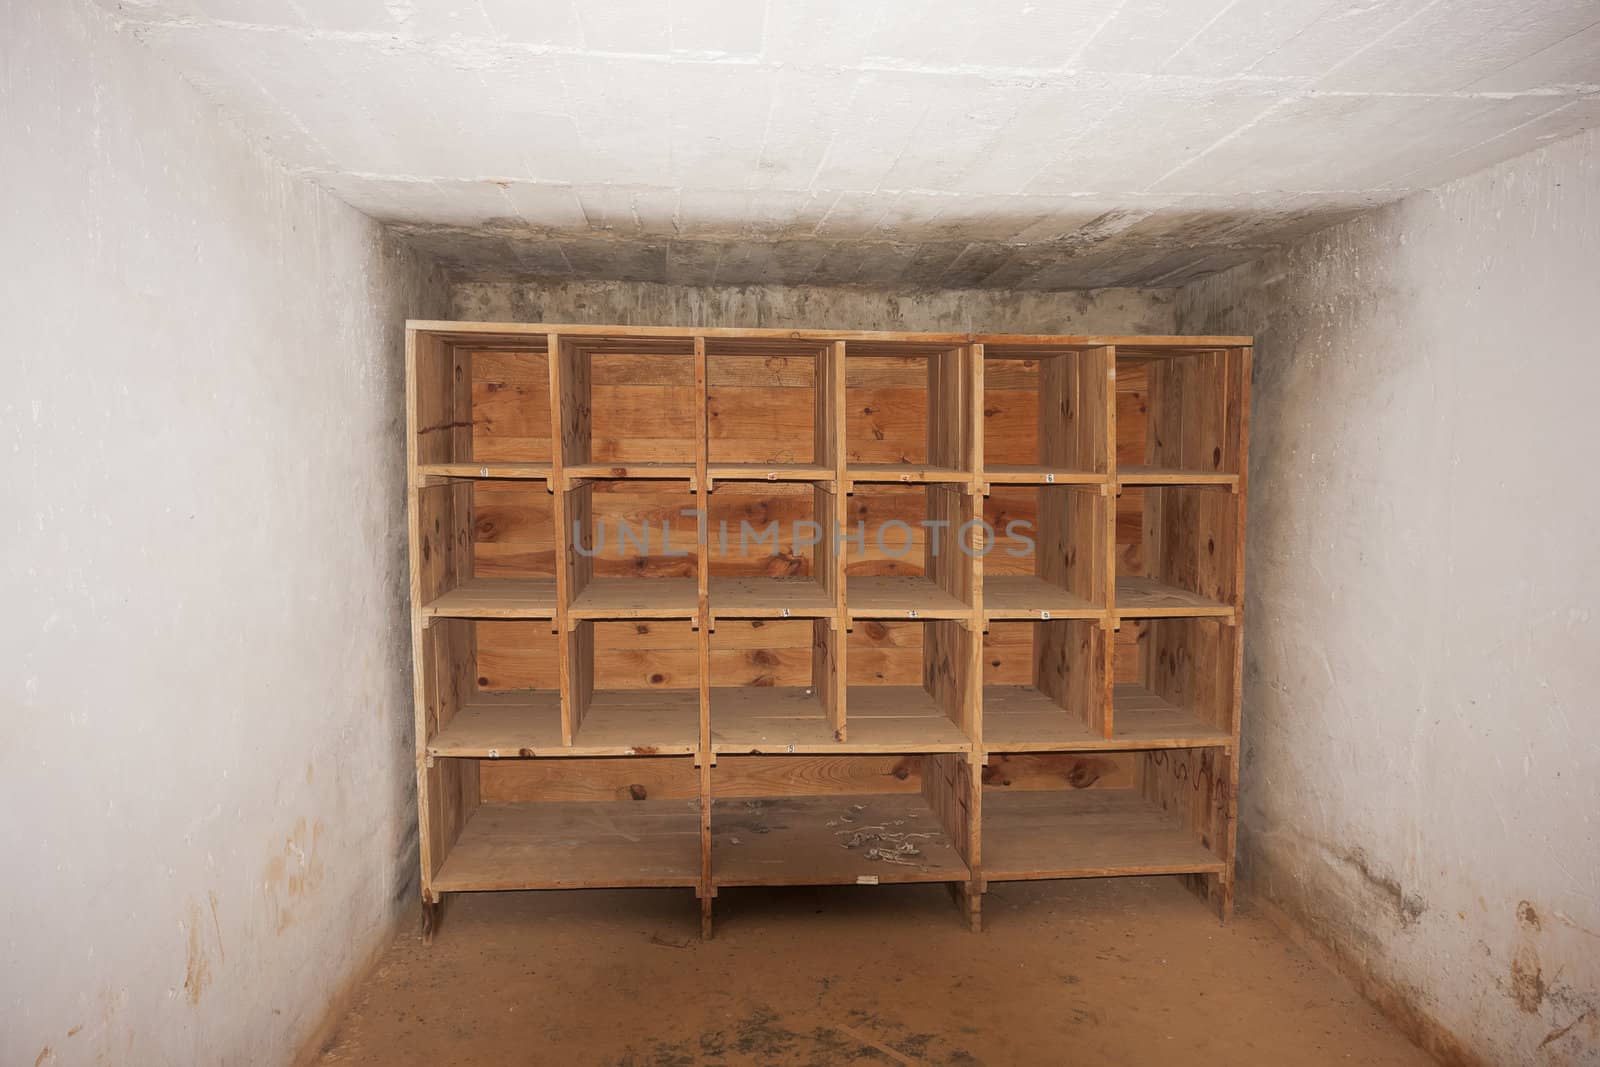 Wooden empty shelf in storage room for explosives in abandoned Lousal mine, Grandola, Portugal